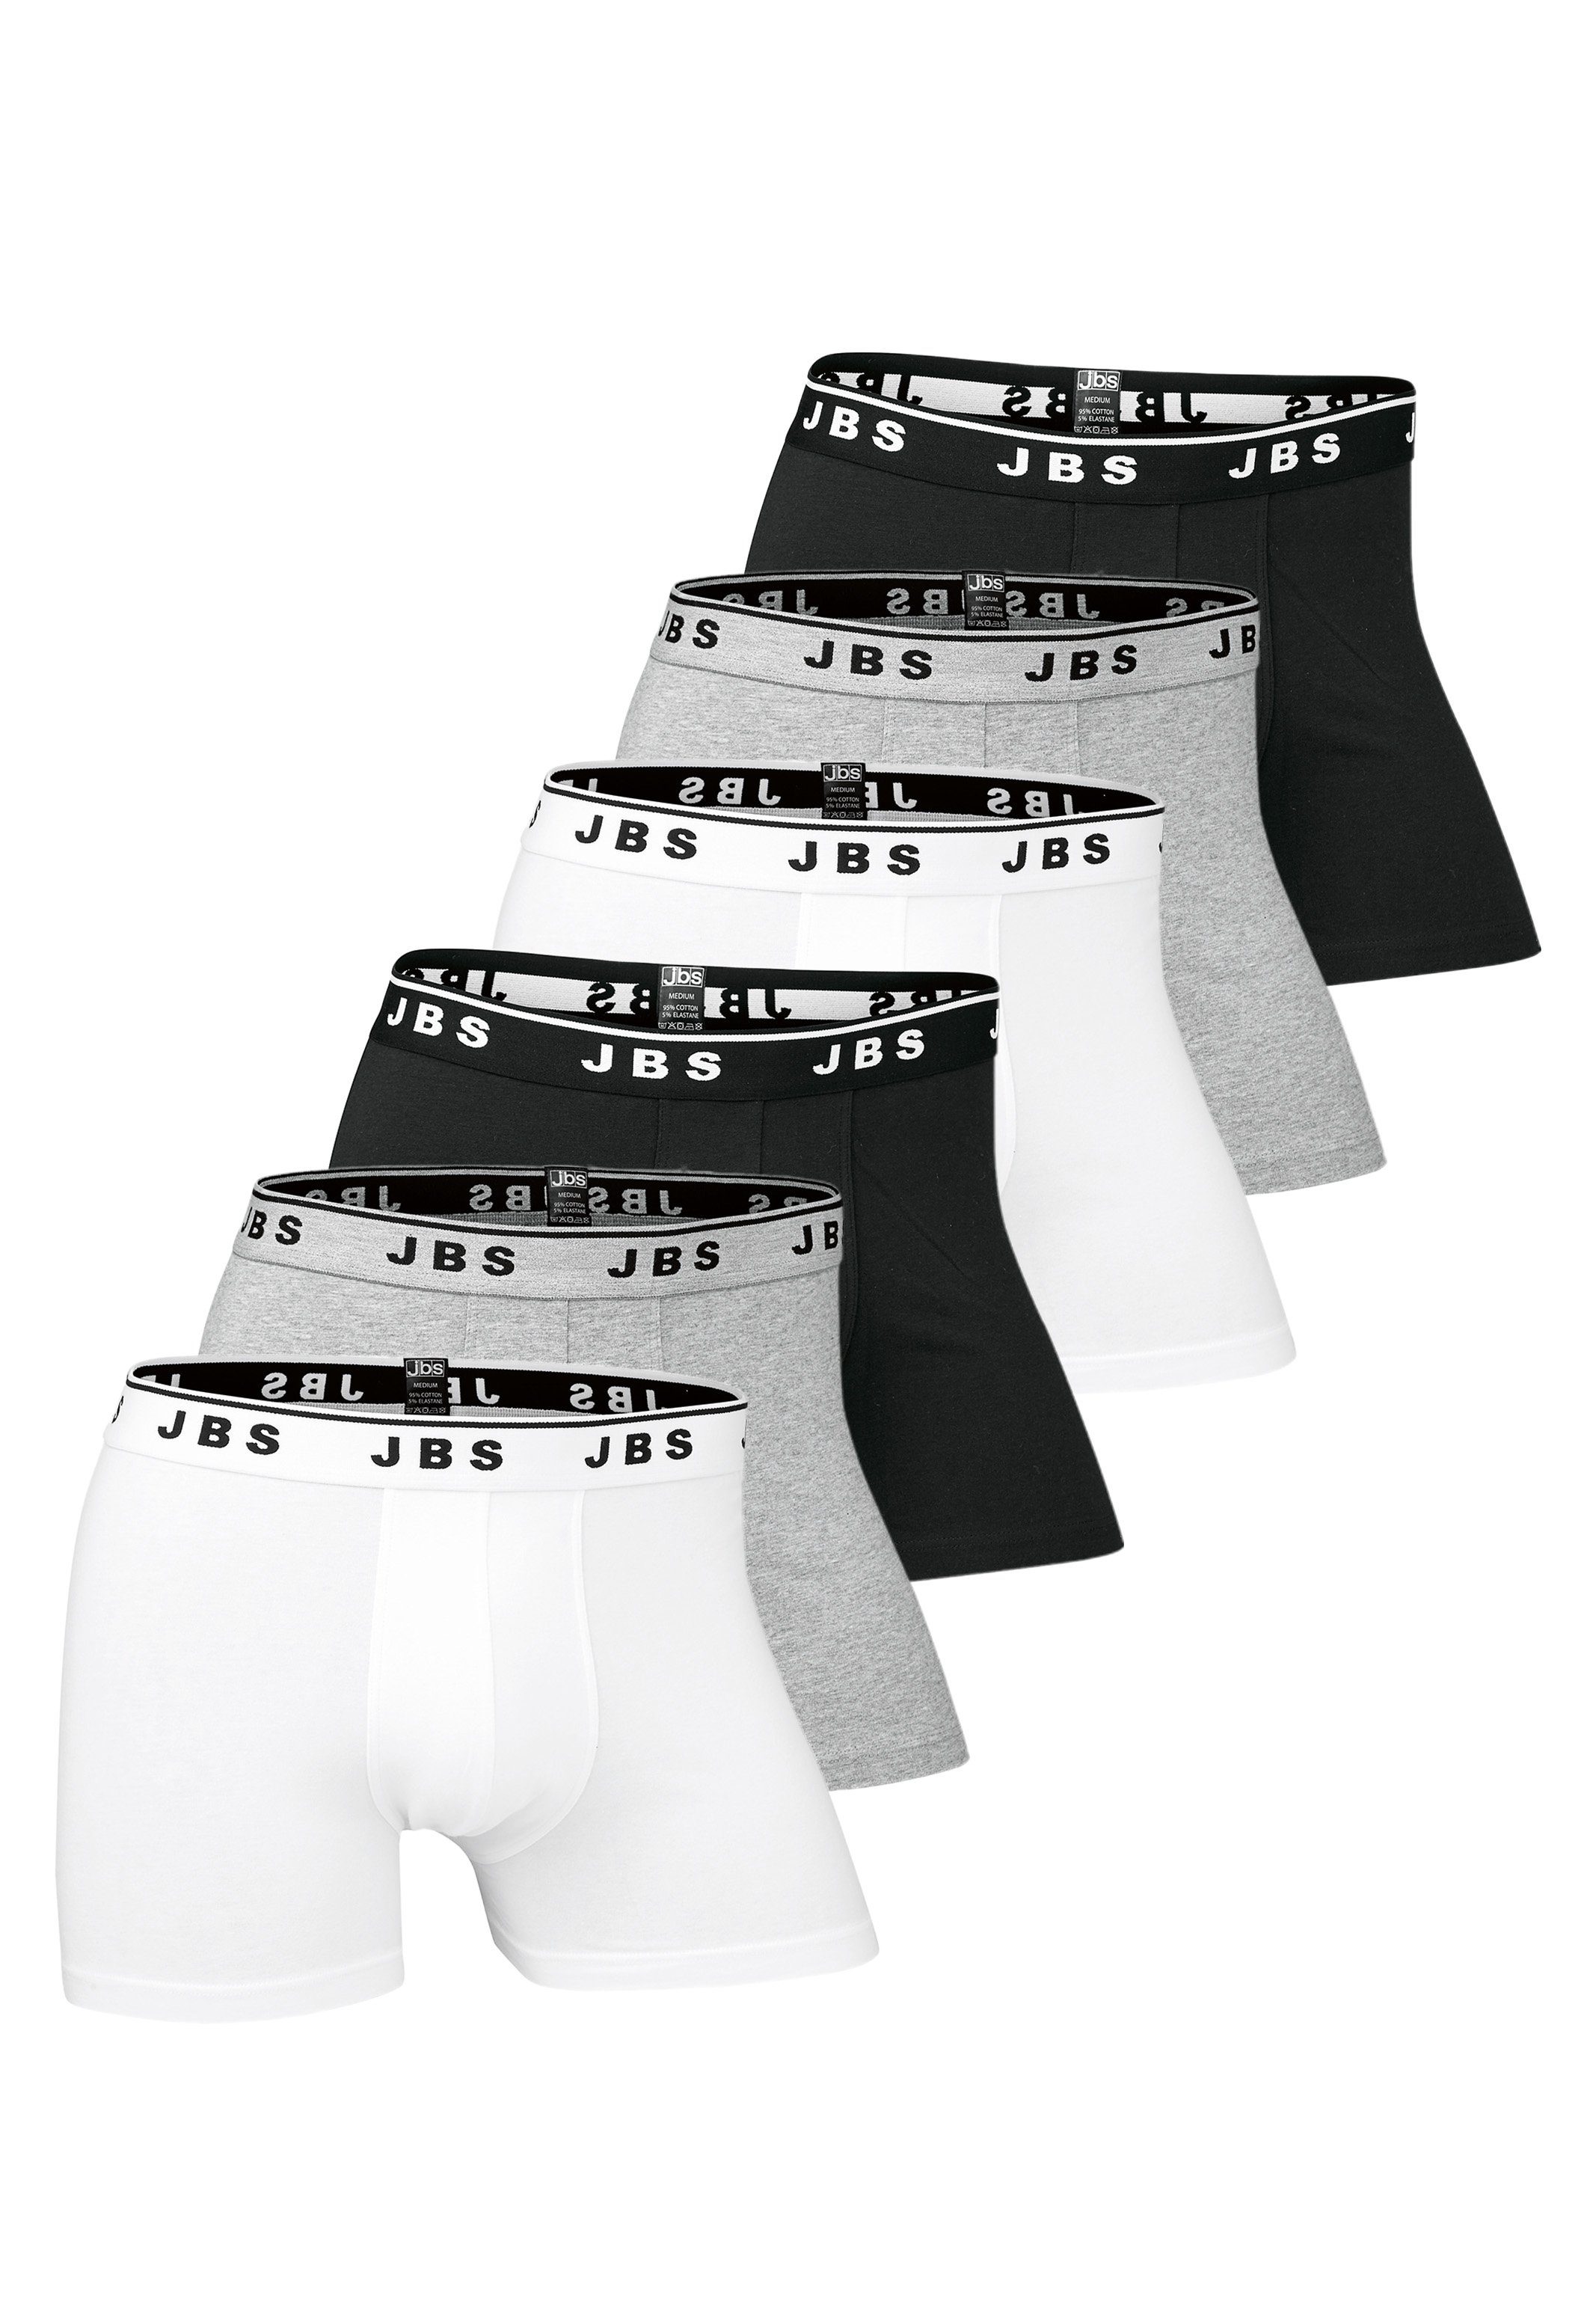 / Retro Pack jbs Atmungsaktiv Baumwolle Long / Boxer - - Organic - Cotton Ohne / 6er Weiß Grau Eingriff (Spar-Set, Schwarz Pant Short 6-St)